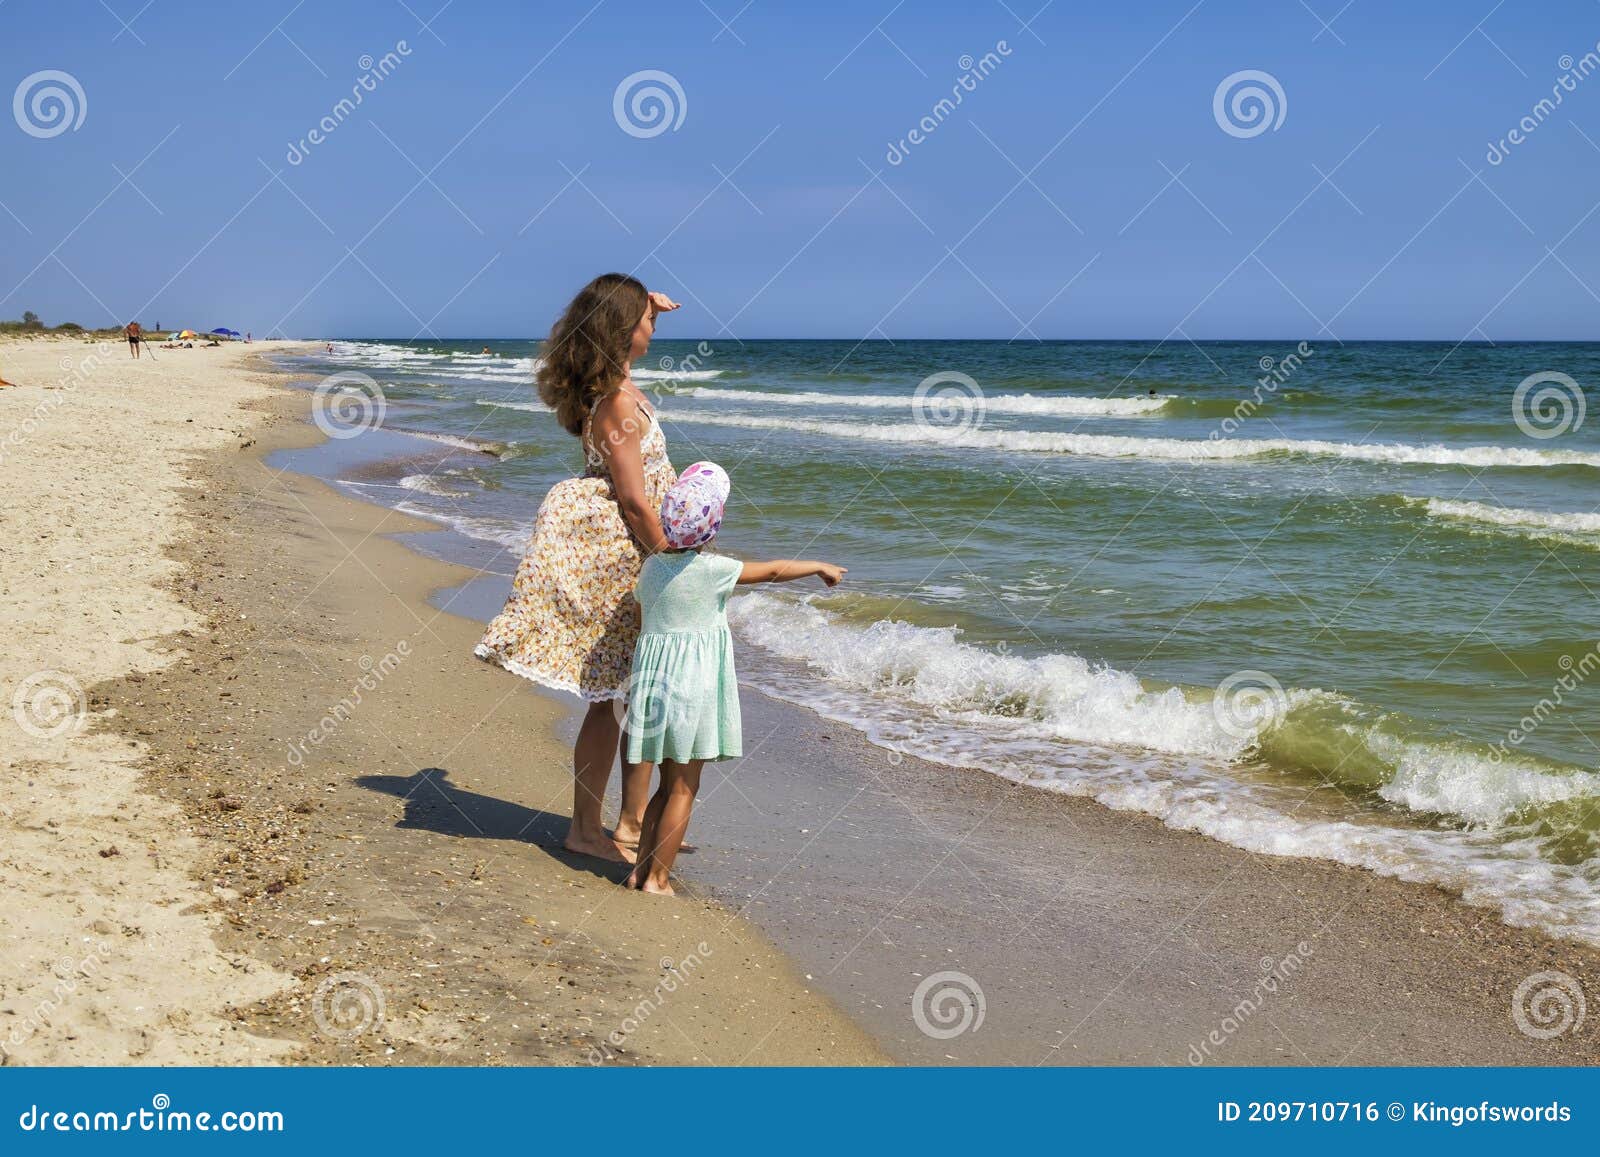 Мокрая девочка на берегу моря